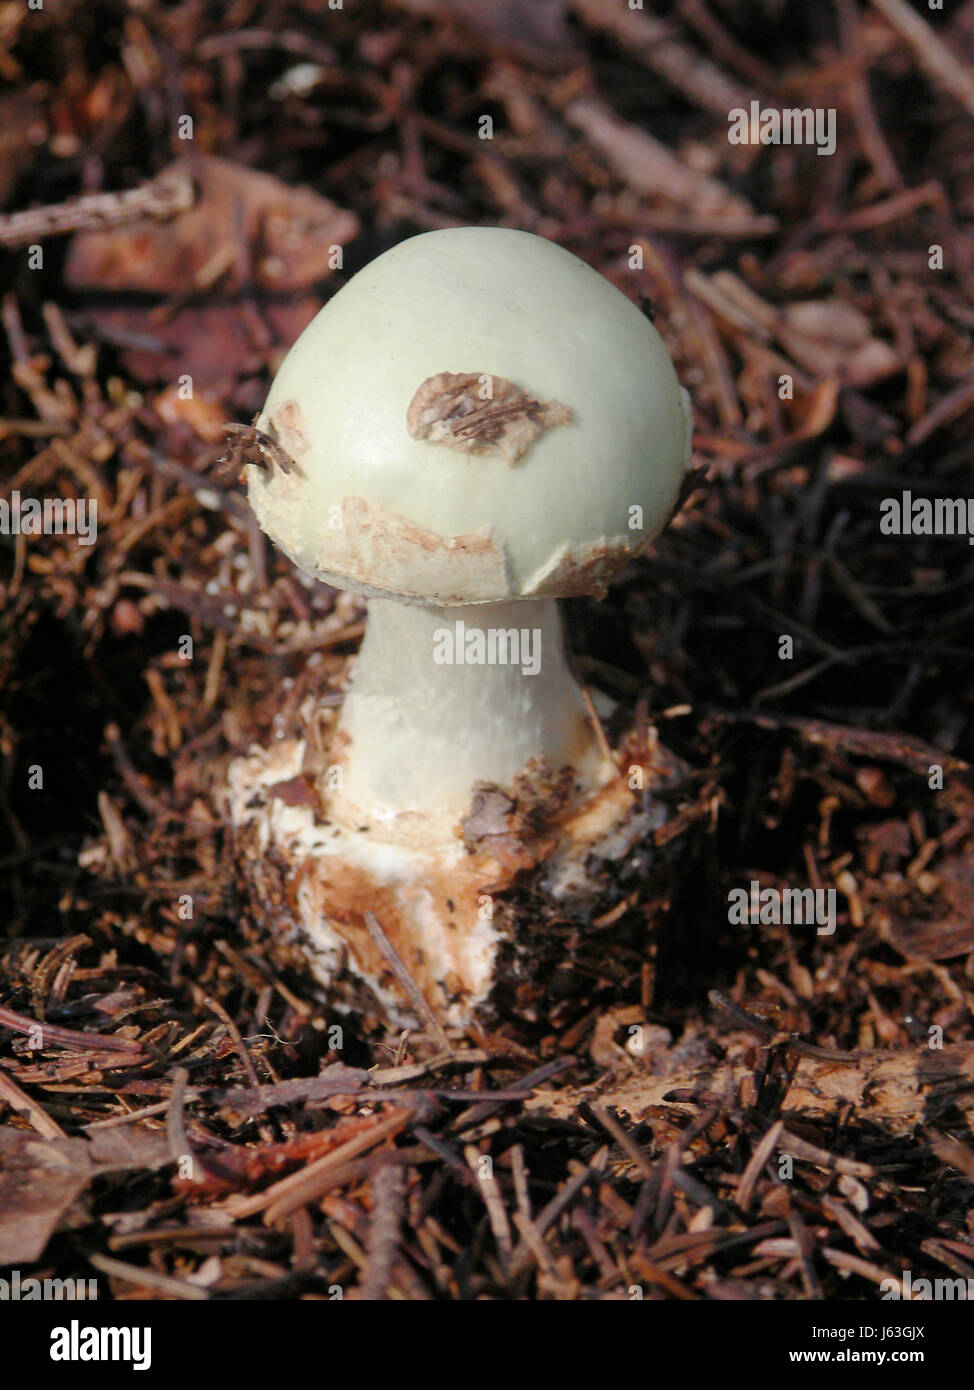 detail death angel angels mushrooms mushroom fungus forest nature fall autumn Stock Photo